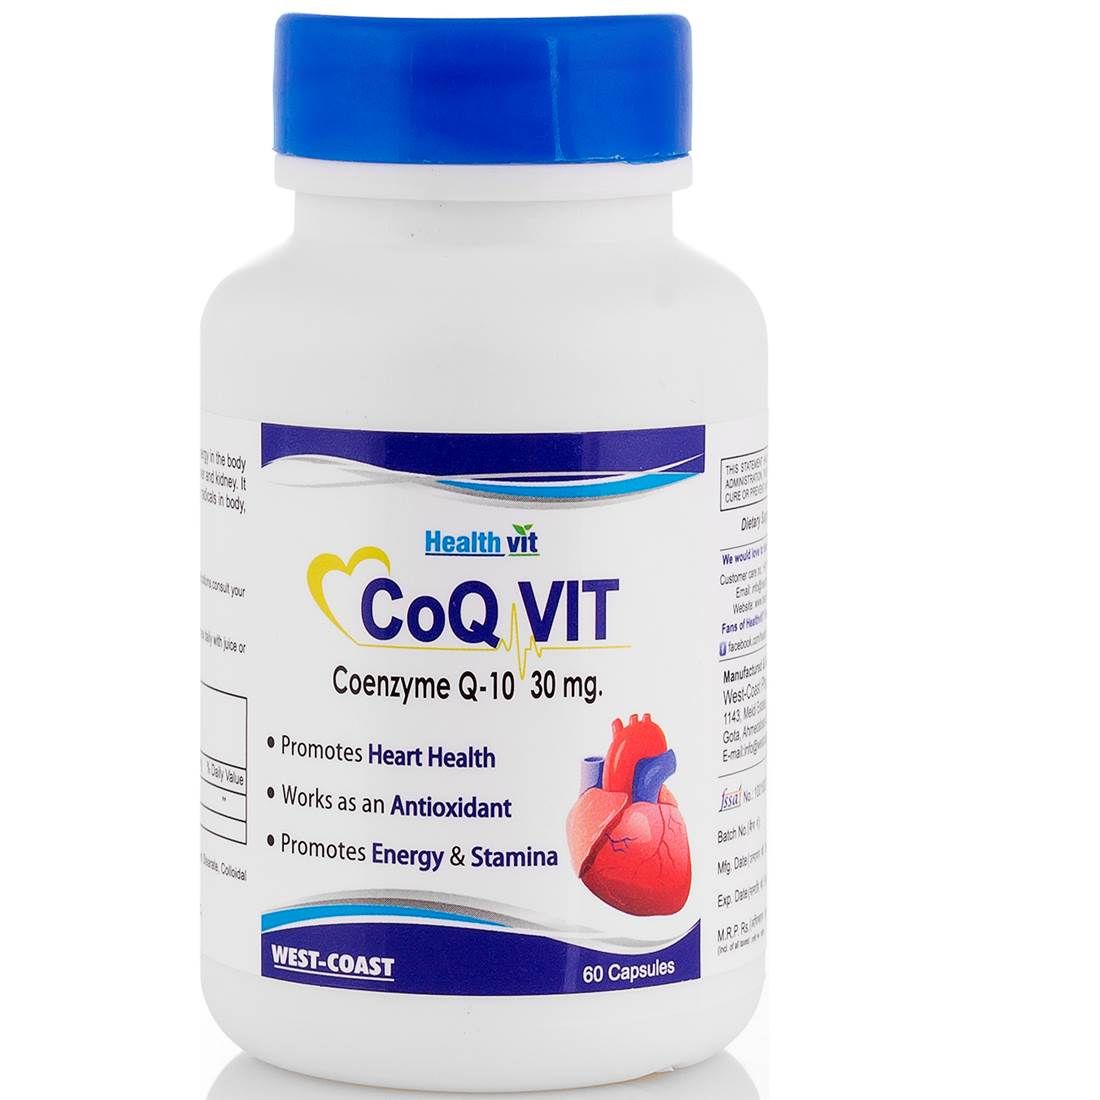 Healthvit CoQ-Vit Coenzyme Q-10 30mg 60 capsules